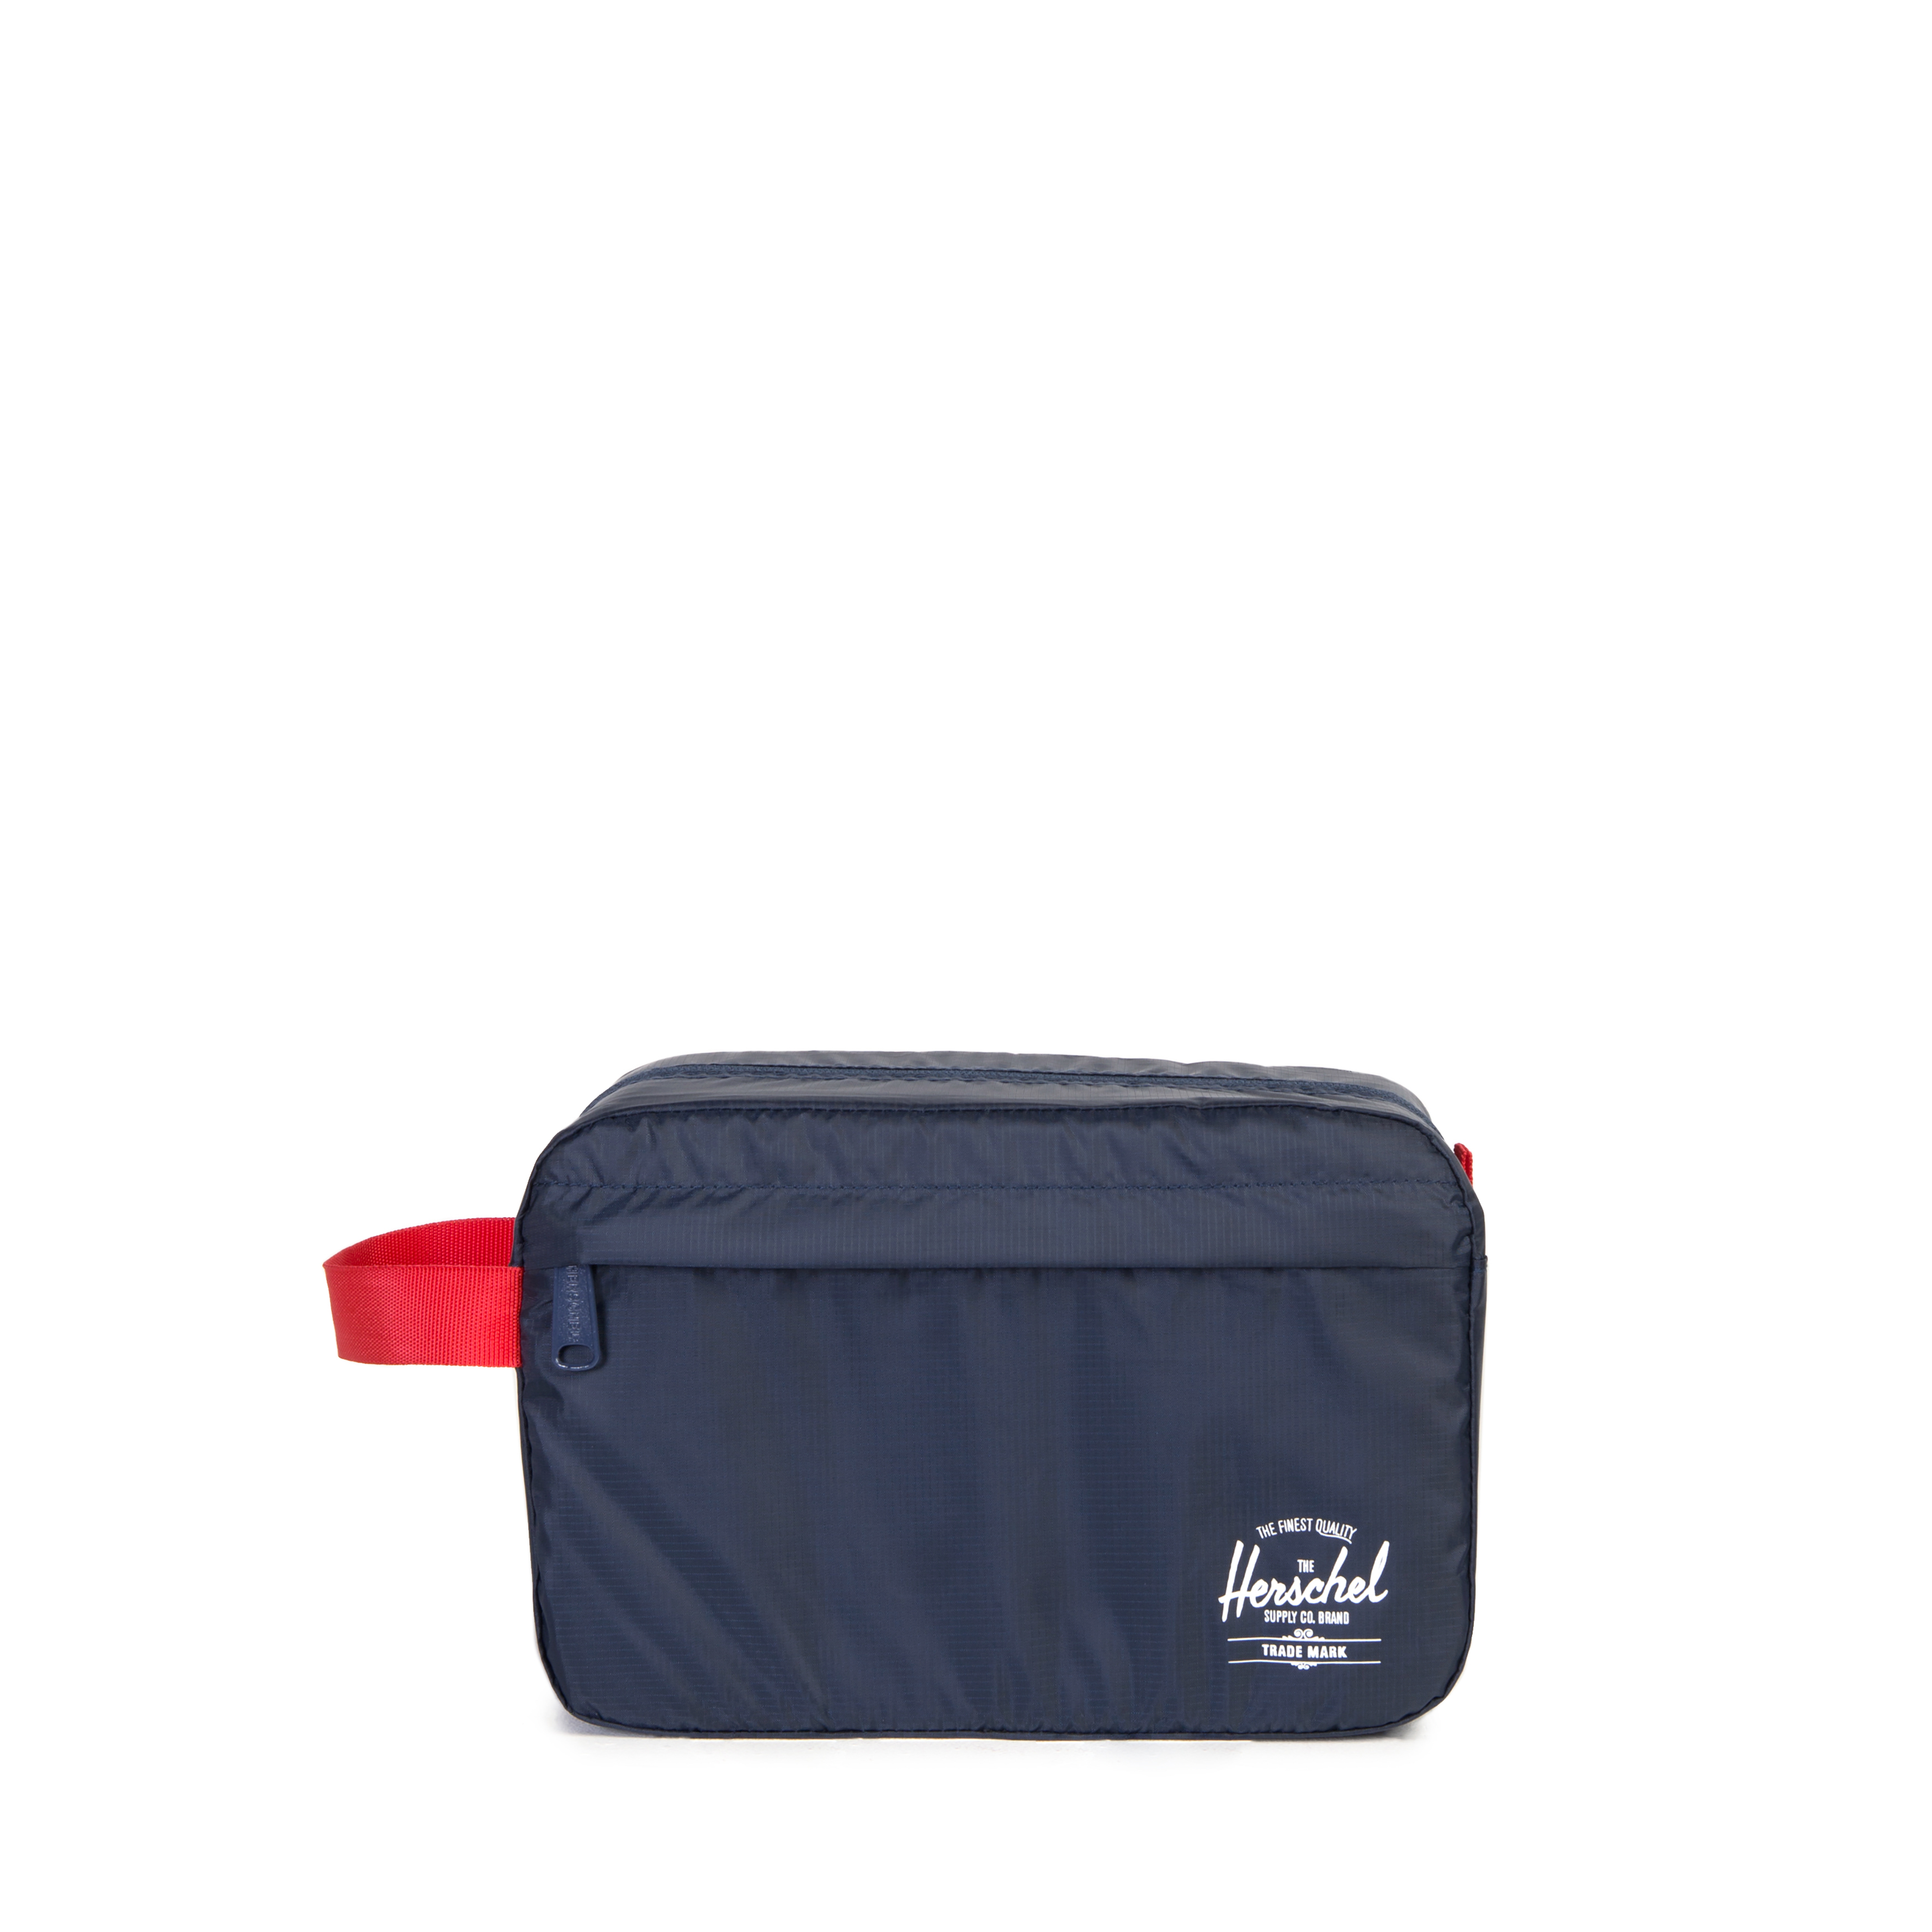 Blu & Brown Herschel Supply Co Viaggio Wash Bag servizio kit dentifricio Spazzola 